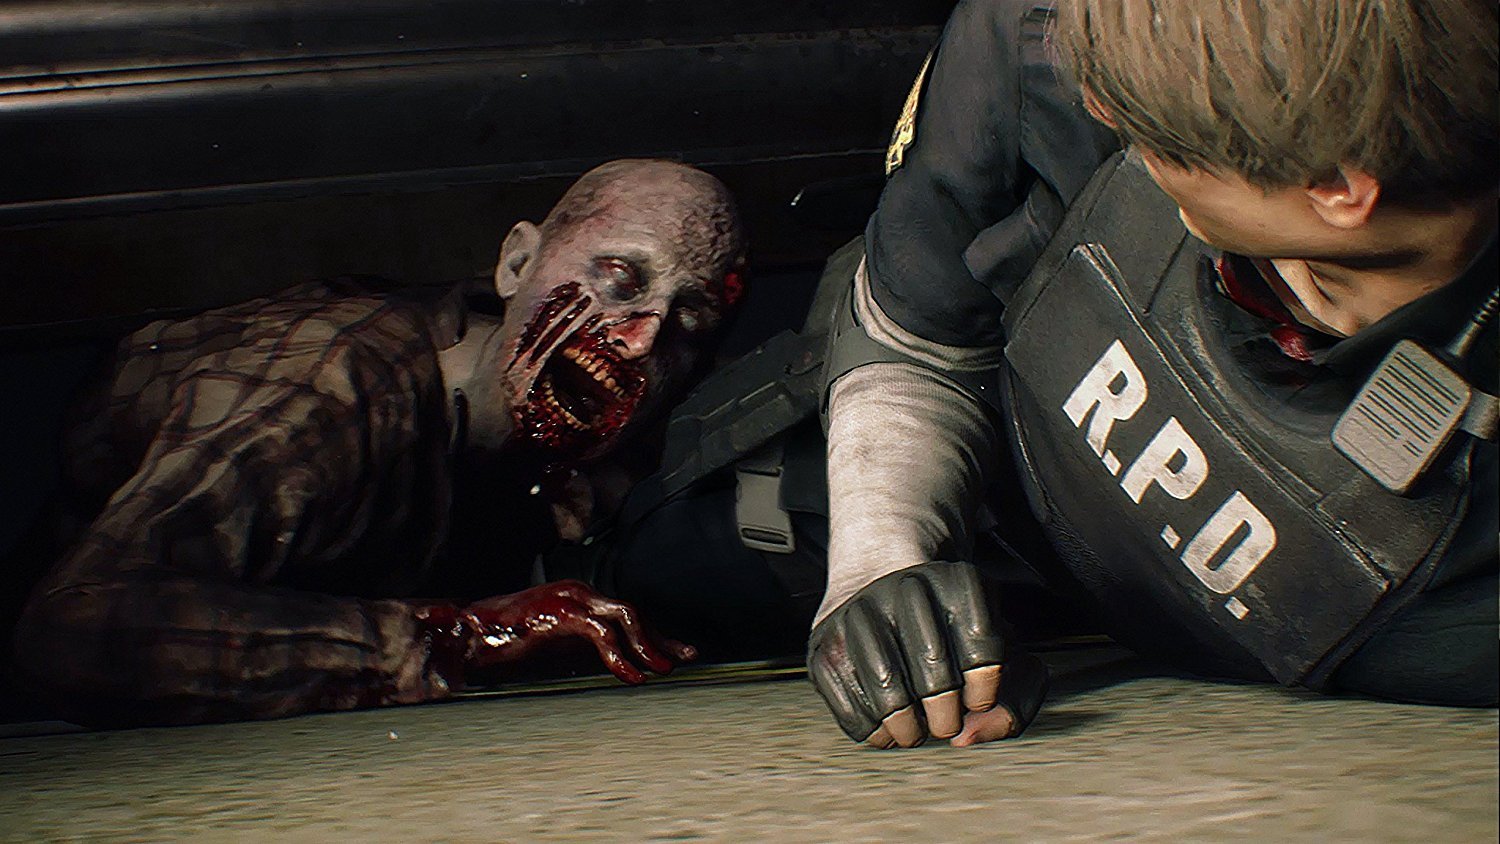 RESIDENT EVIL 2 Remake Trailer Finally Debuts At E3 2018